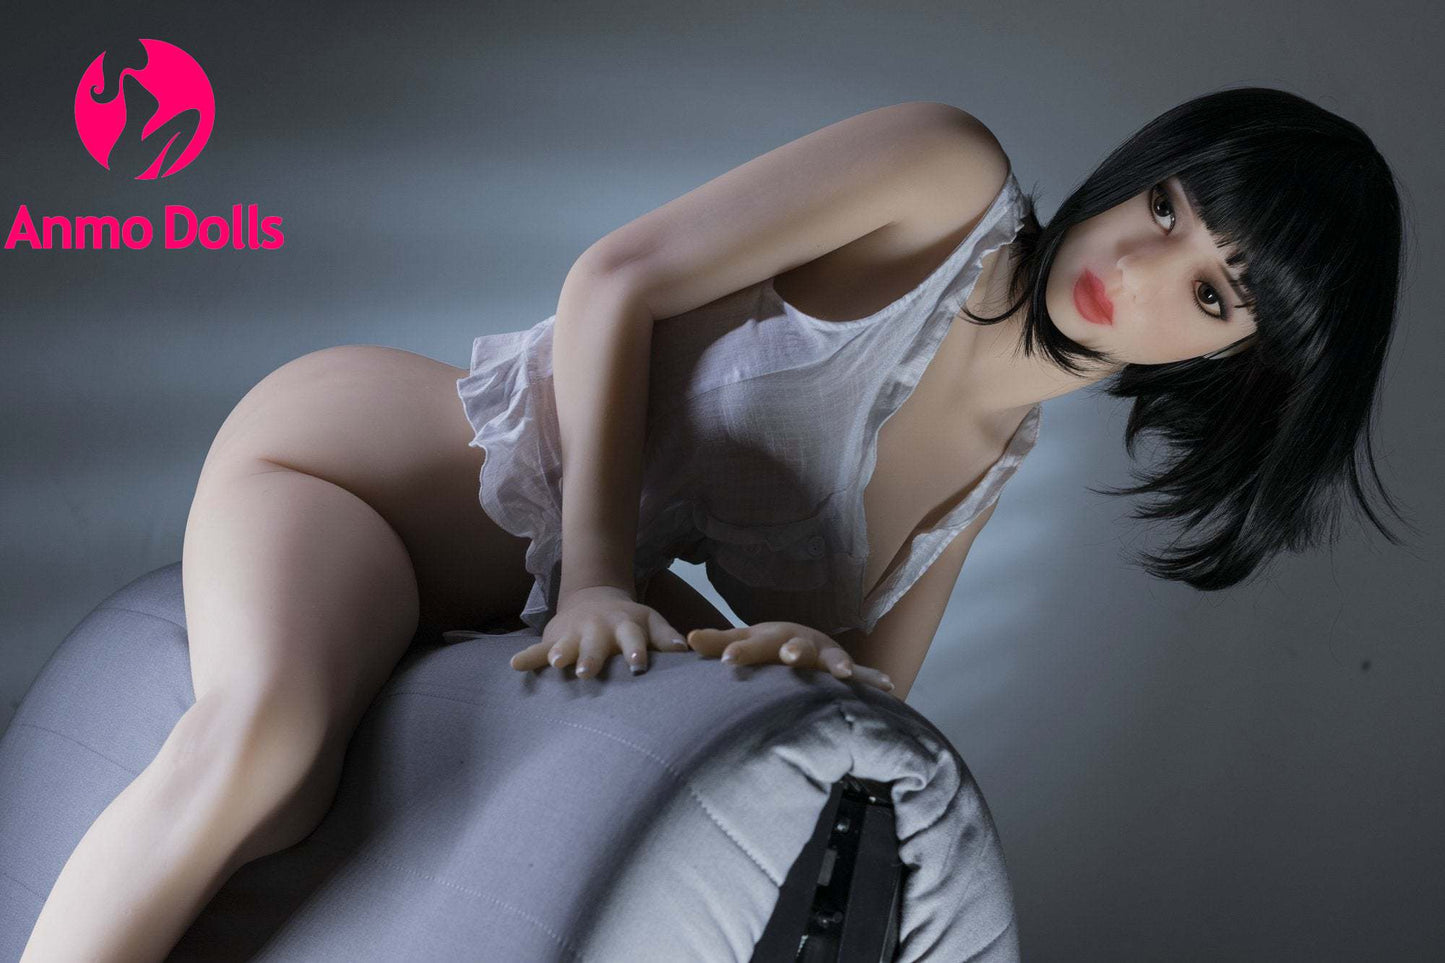 Prima - Ultra Hot Sex Doll Very Realistic